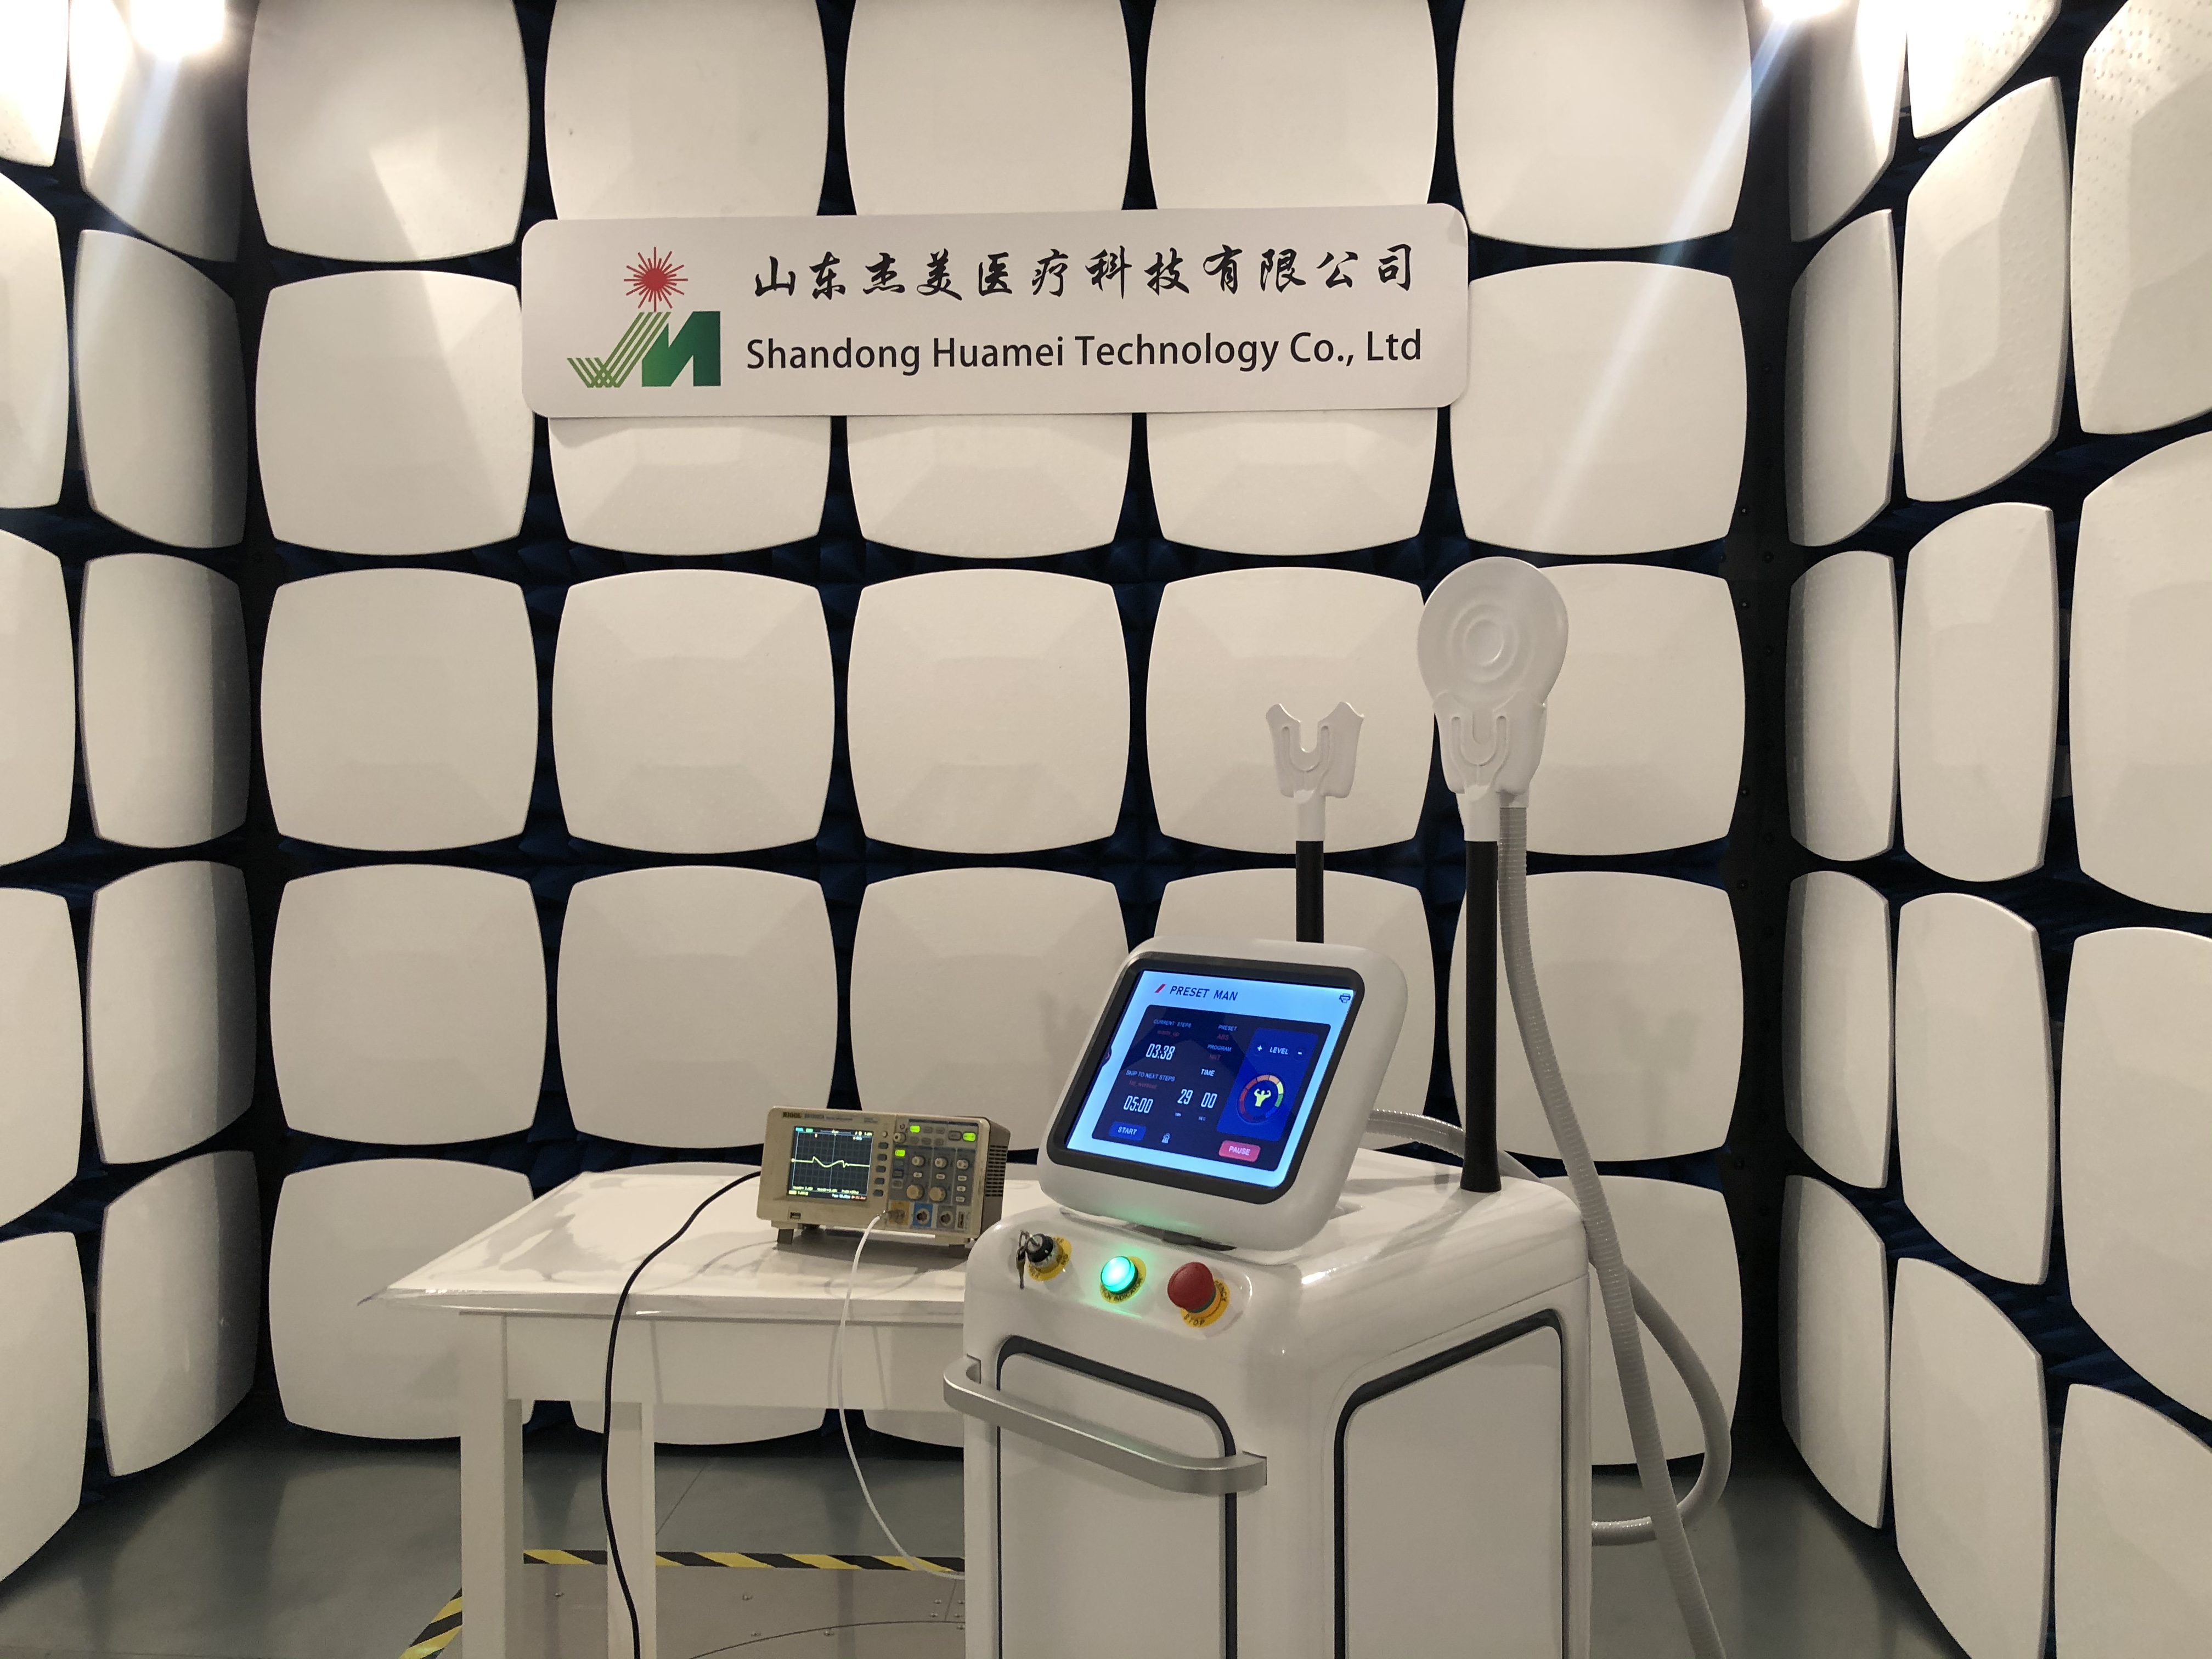 Ang electromagnetic laboratory sa Shandong Huamei Technology Co., Ltd.